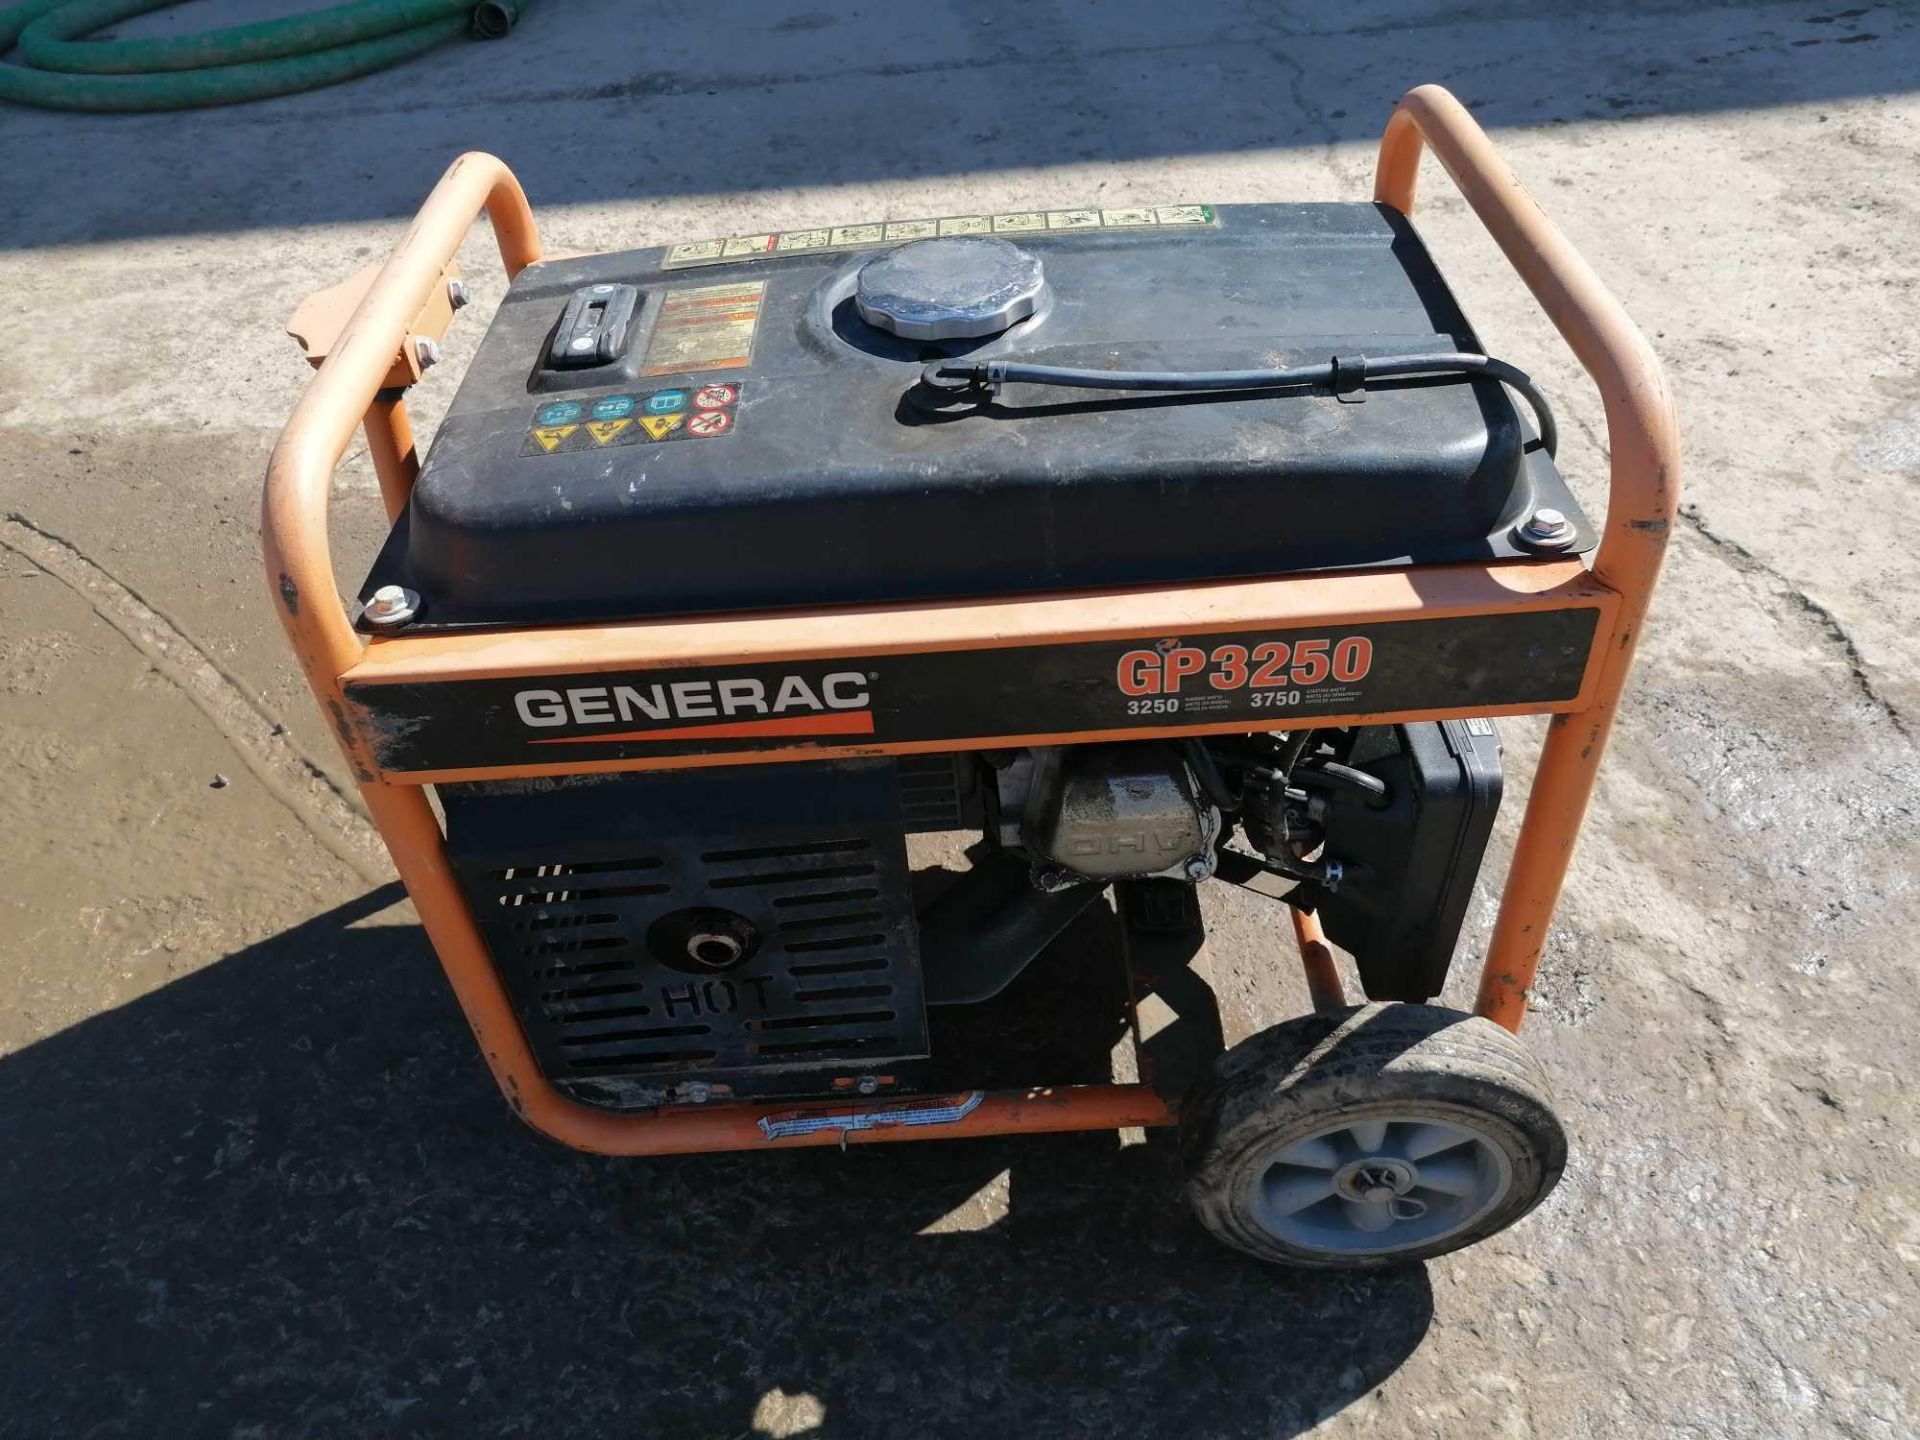 GENERAC WheelHouse GP3250 Generator, Model 095821, Serial #9923395B. Located in Naperville, IL. - Image 6 of 7